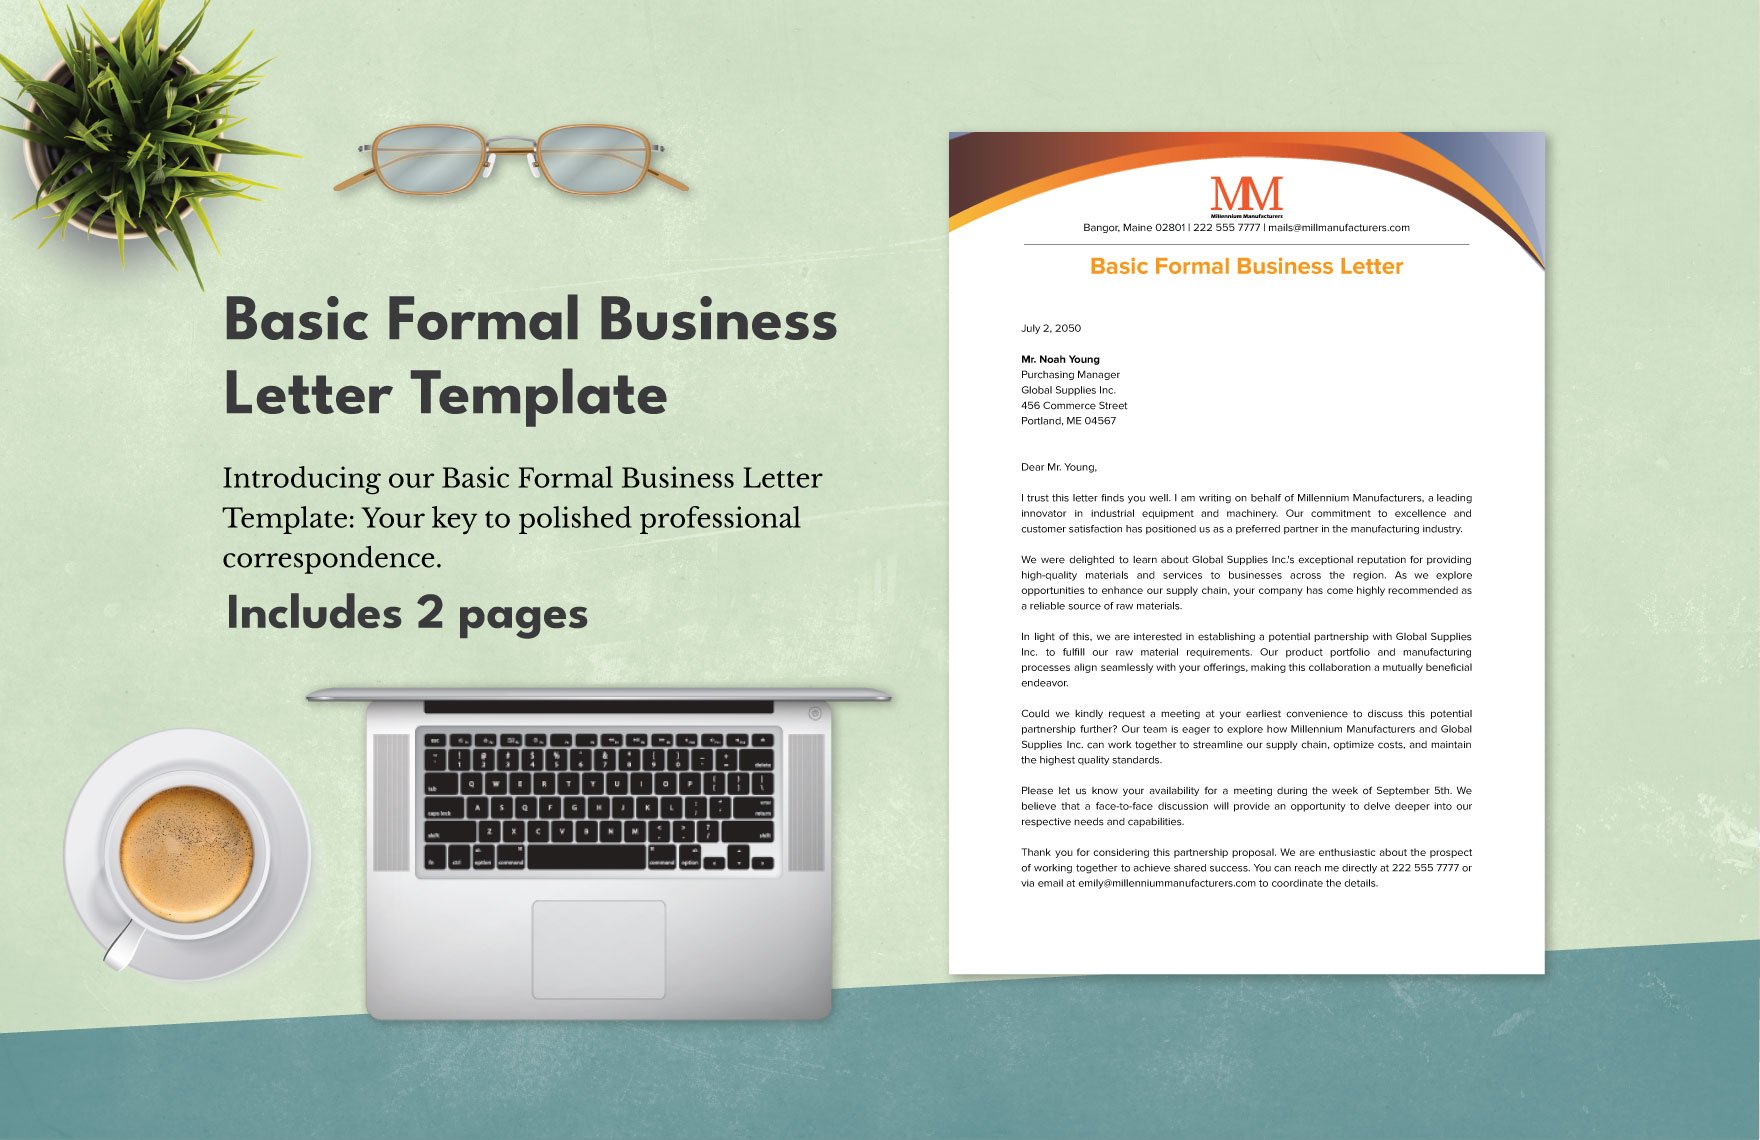 Basic Formal Business Letter Template